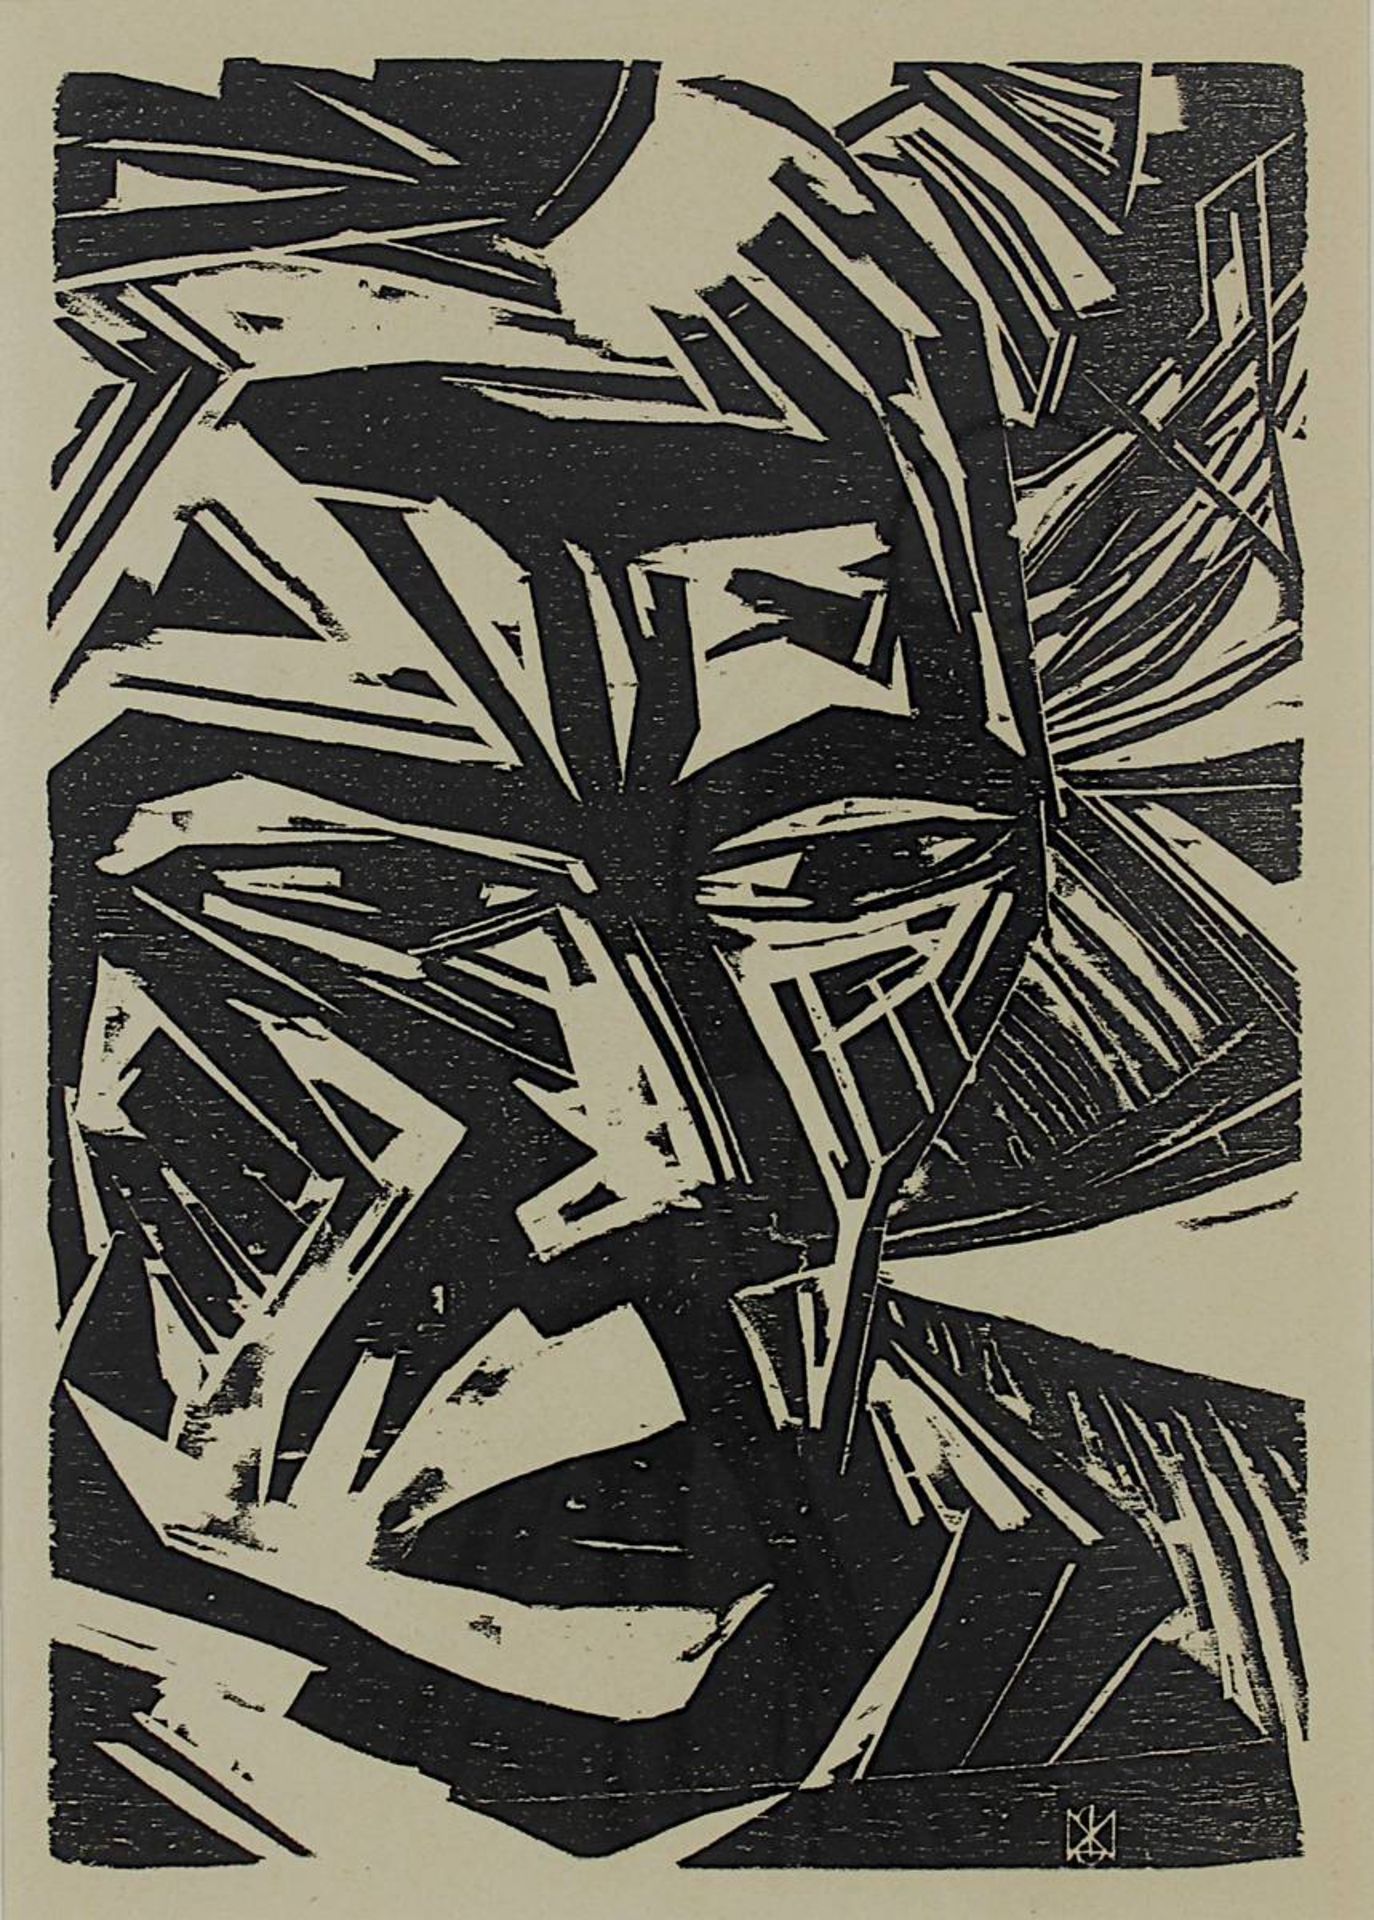 Kaus, Max (Berlin 1891 - 1977 Berlin), Kopf - Selbstbildniss, Holzschnitt, um 1920, im Stock - Bild 2 aus 2